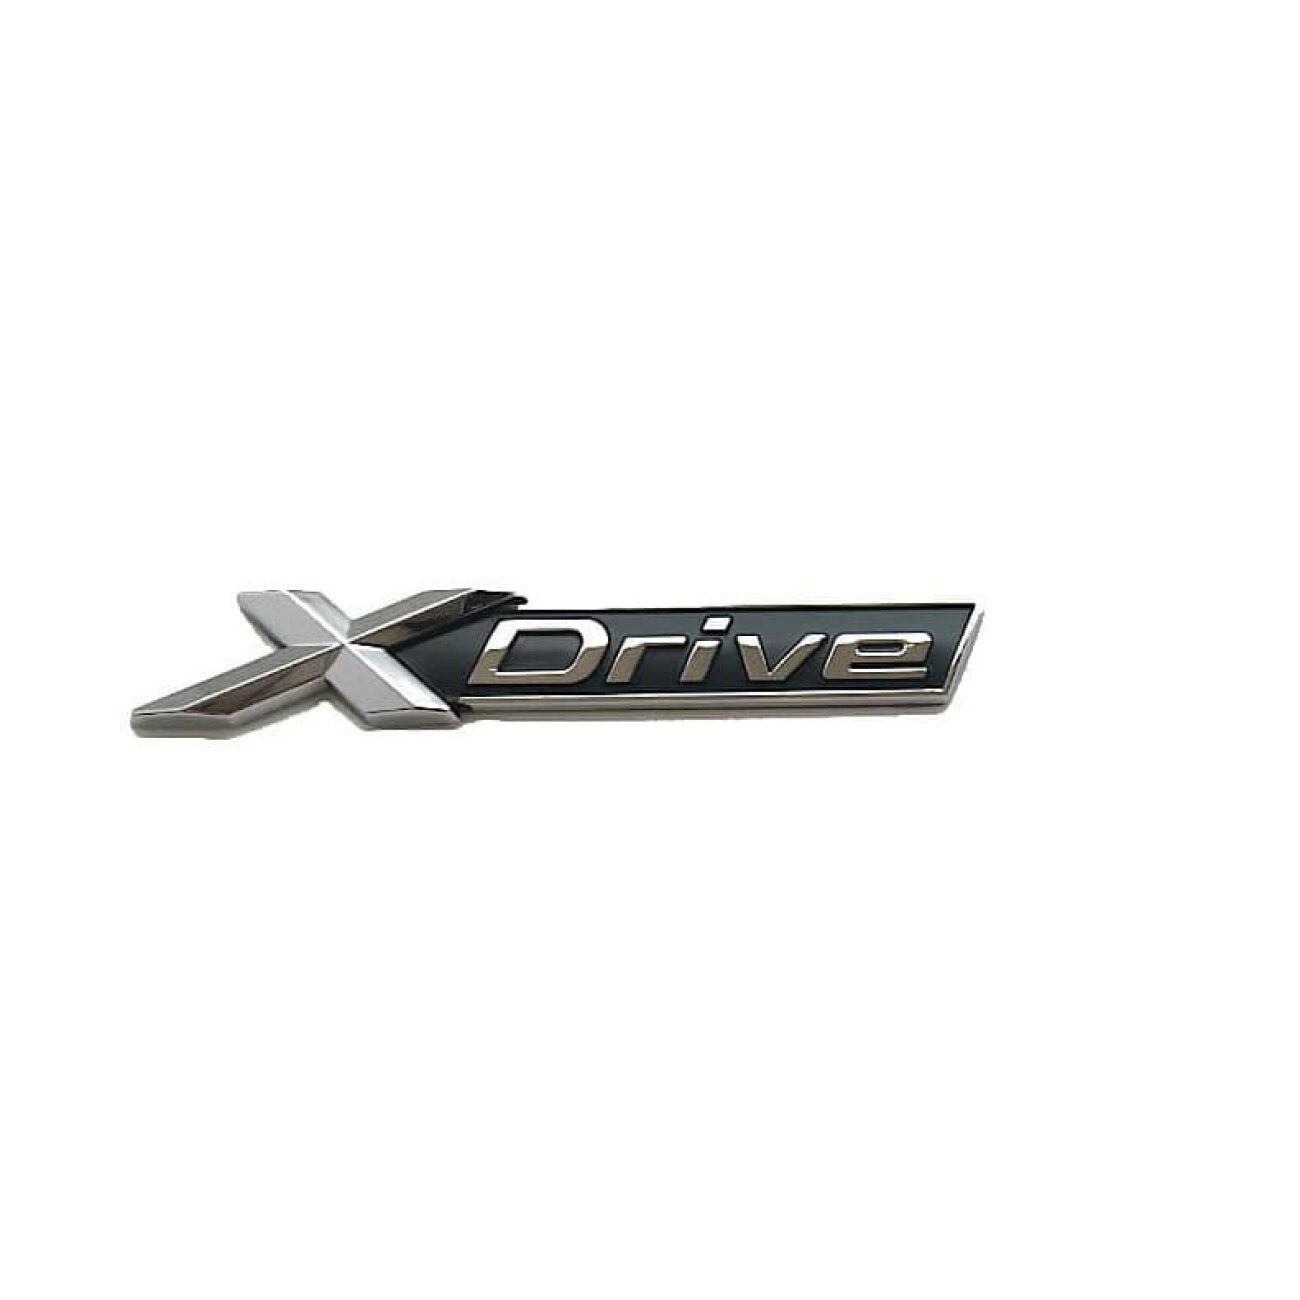 Шильдик X-drive для BMW хром